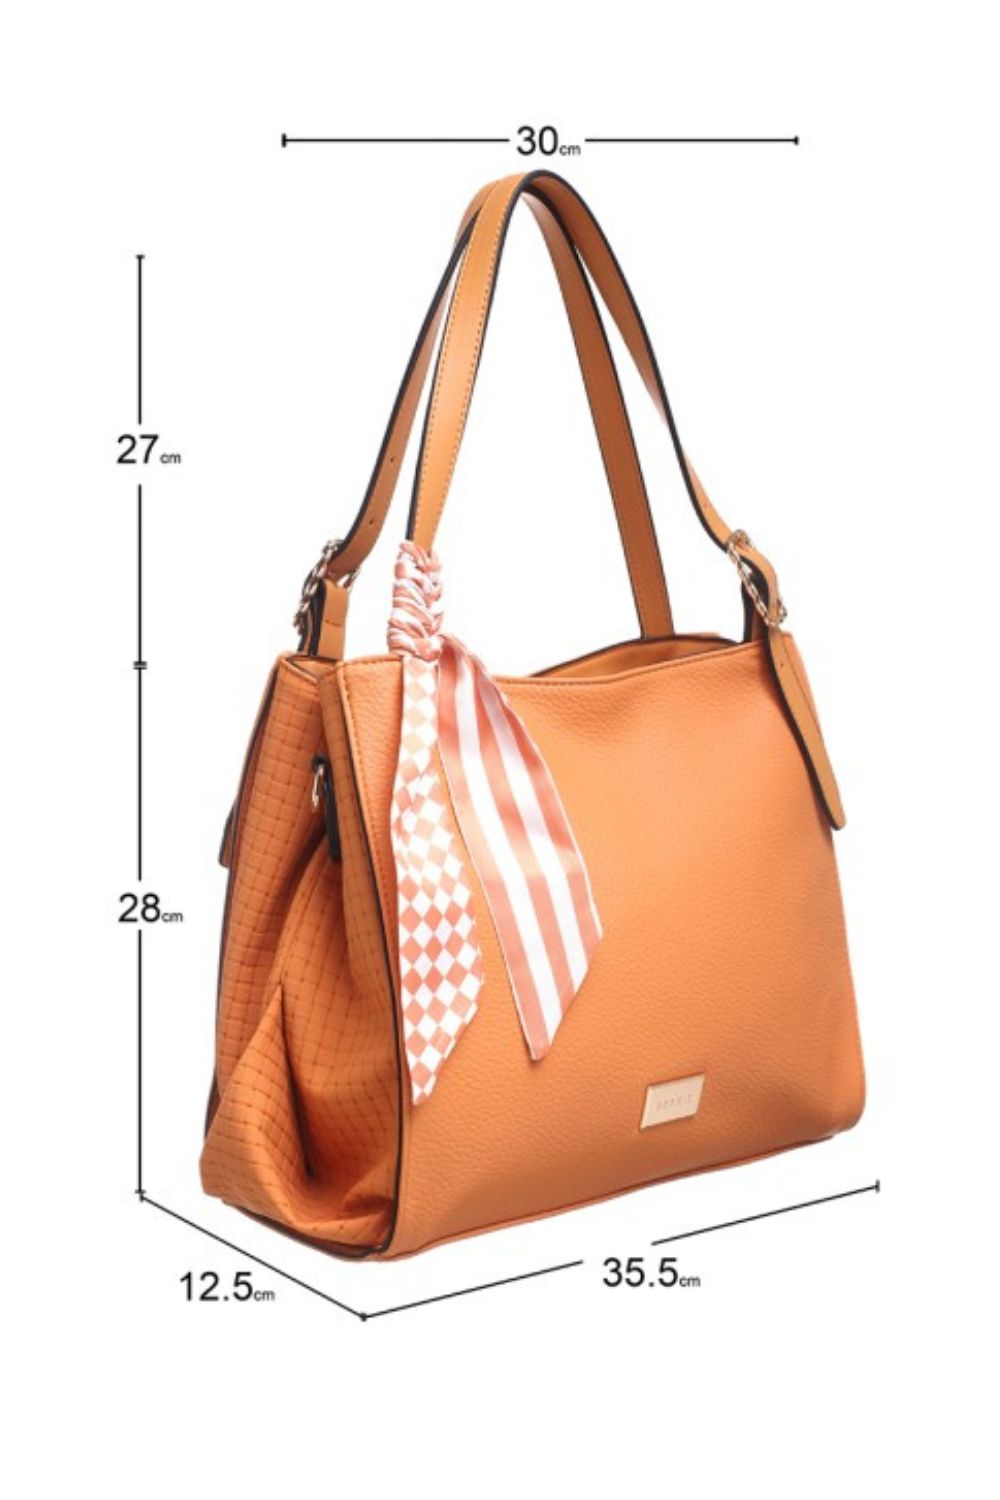 Bessie Handbags Soft Orange Tote Bag with tie accent